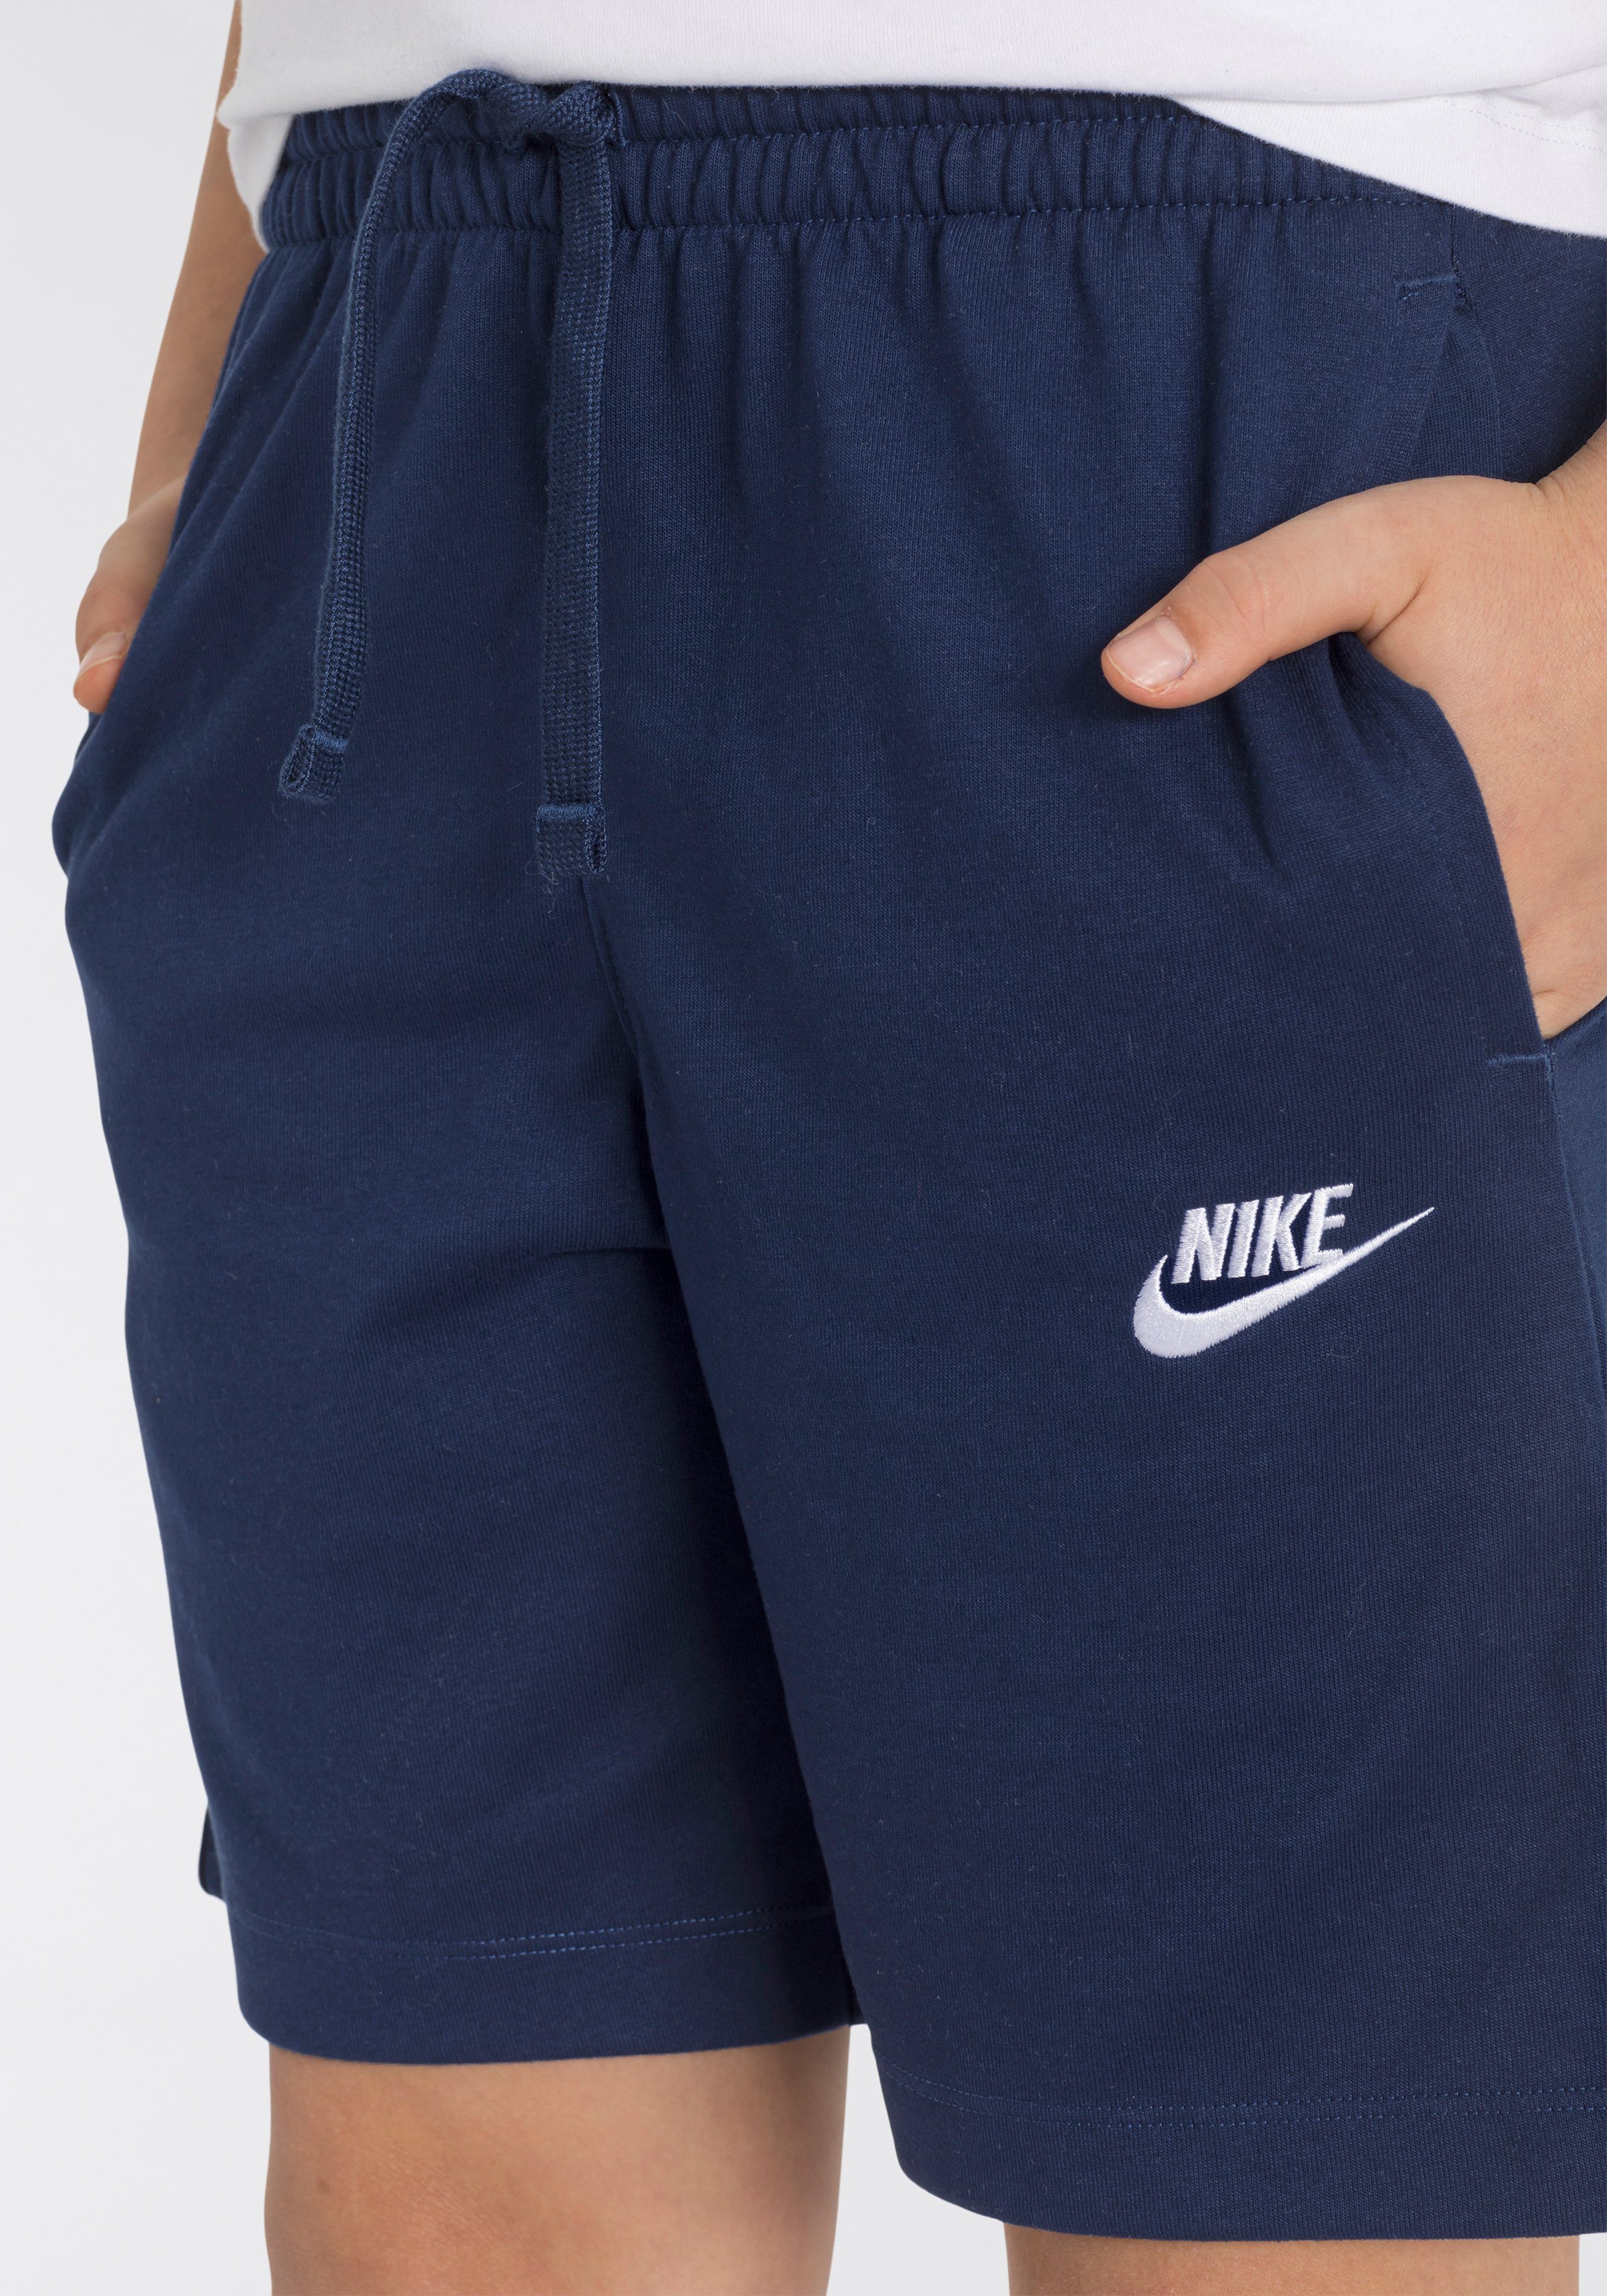 Shorts JERSEY (BOYS) dunkelblau KIDS' Sportswear SHORTS BIG Nike